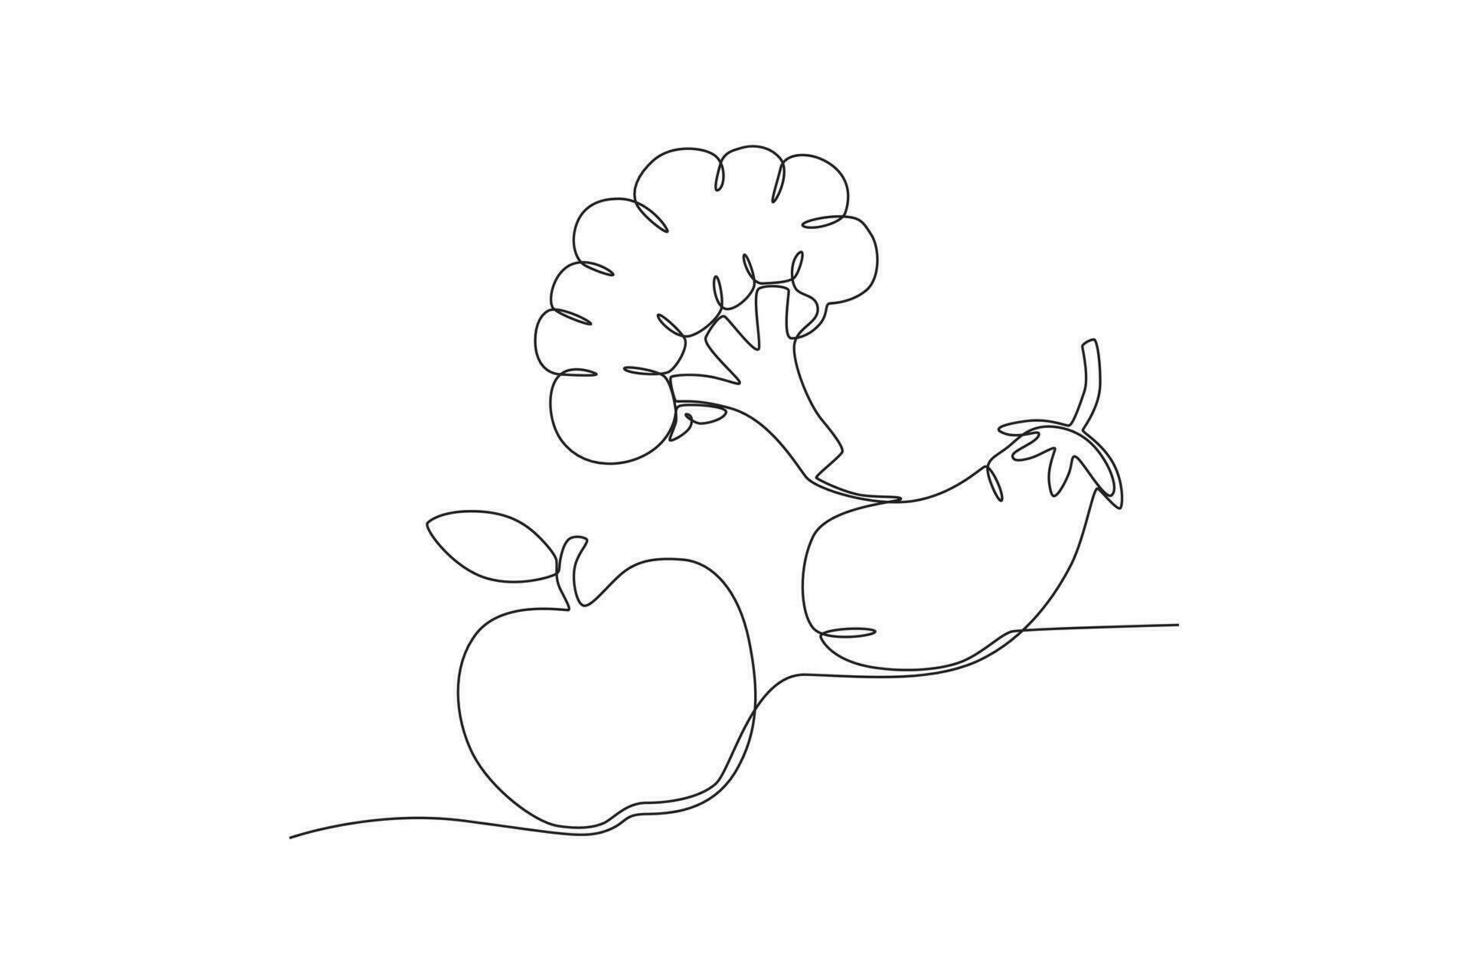 Broccoli, apple, and, eggplant vector